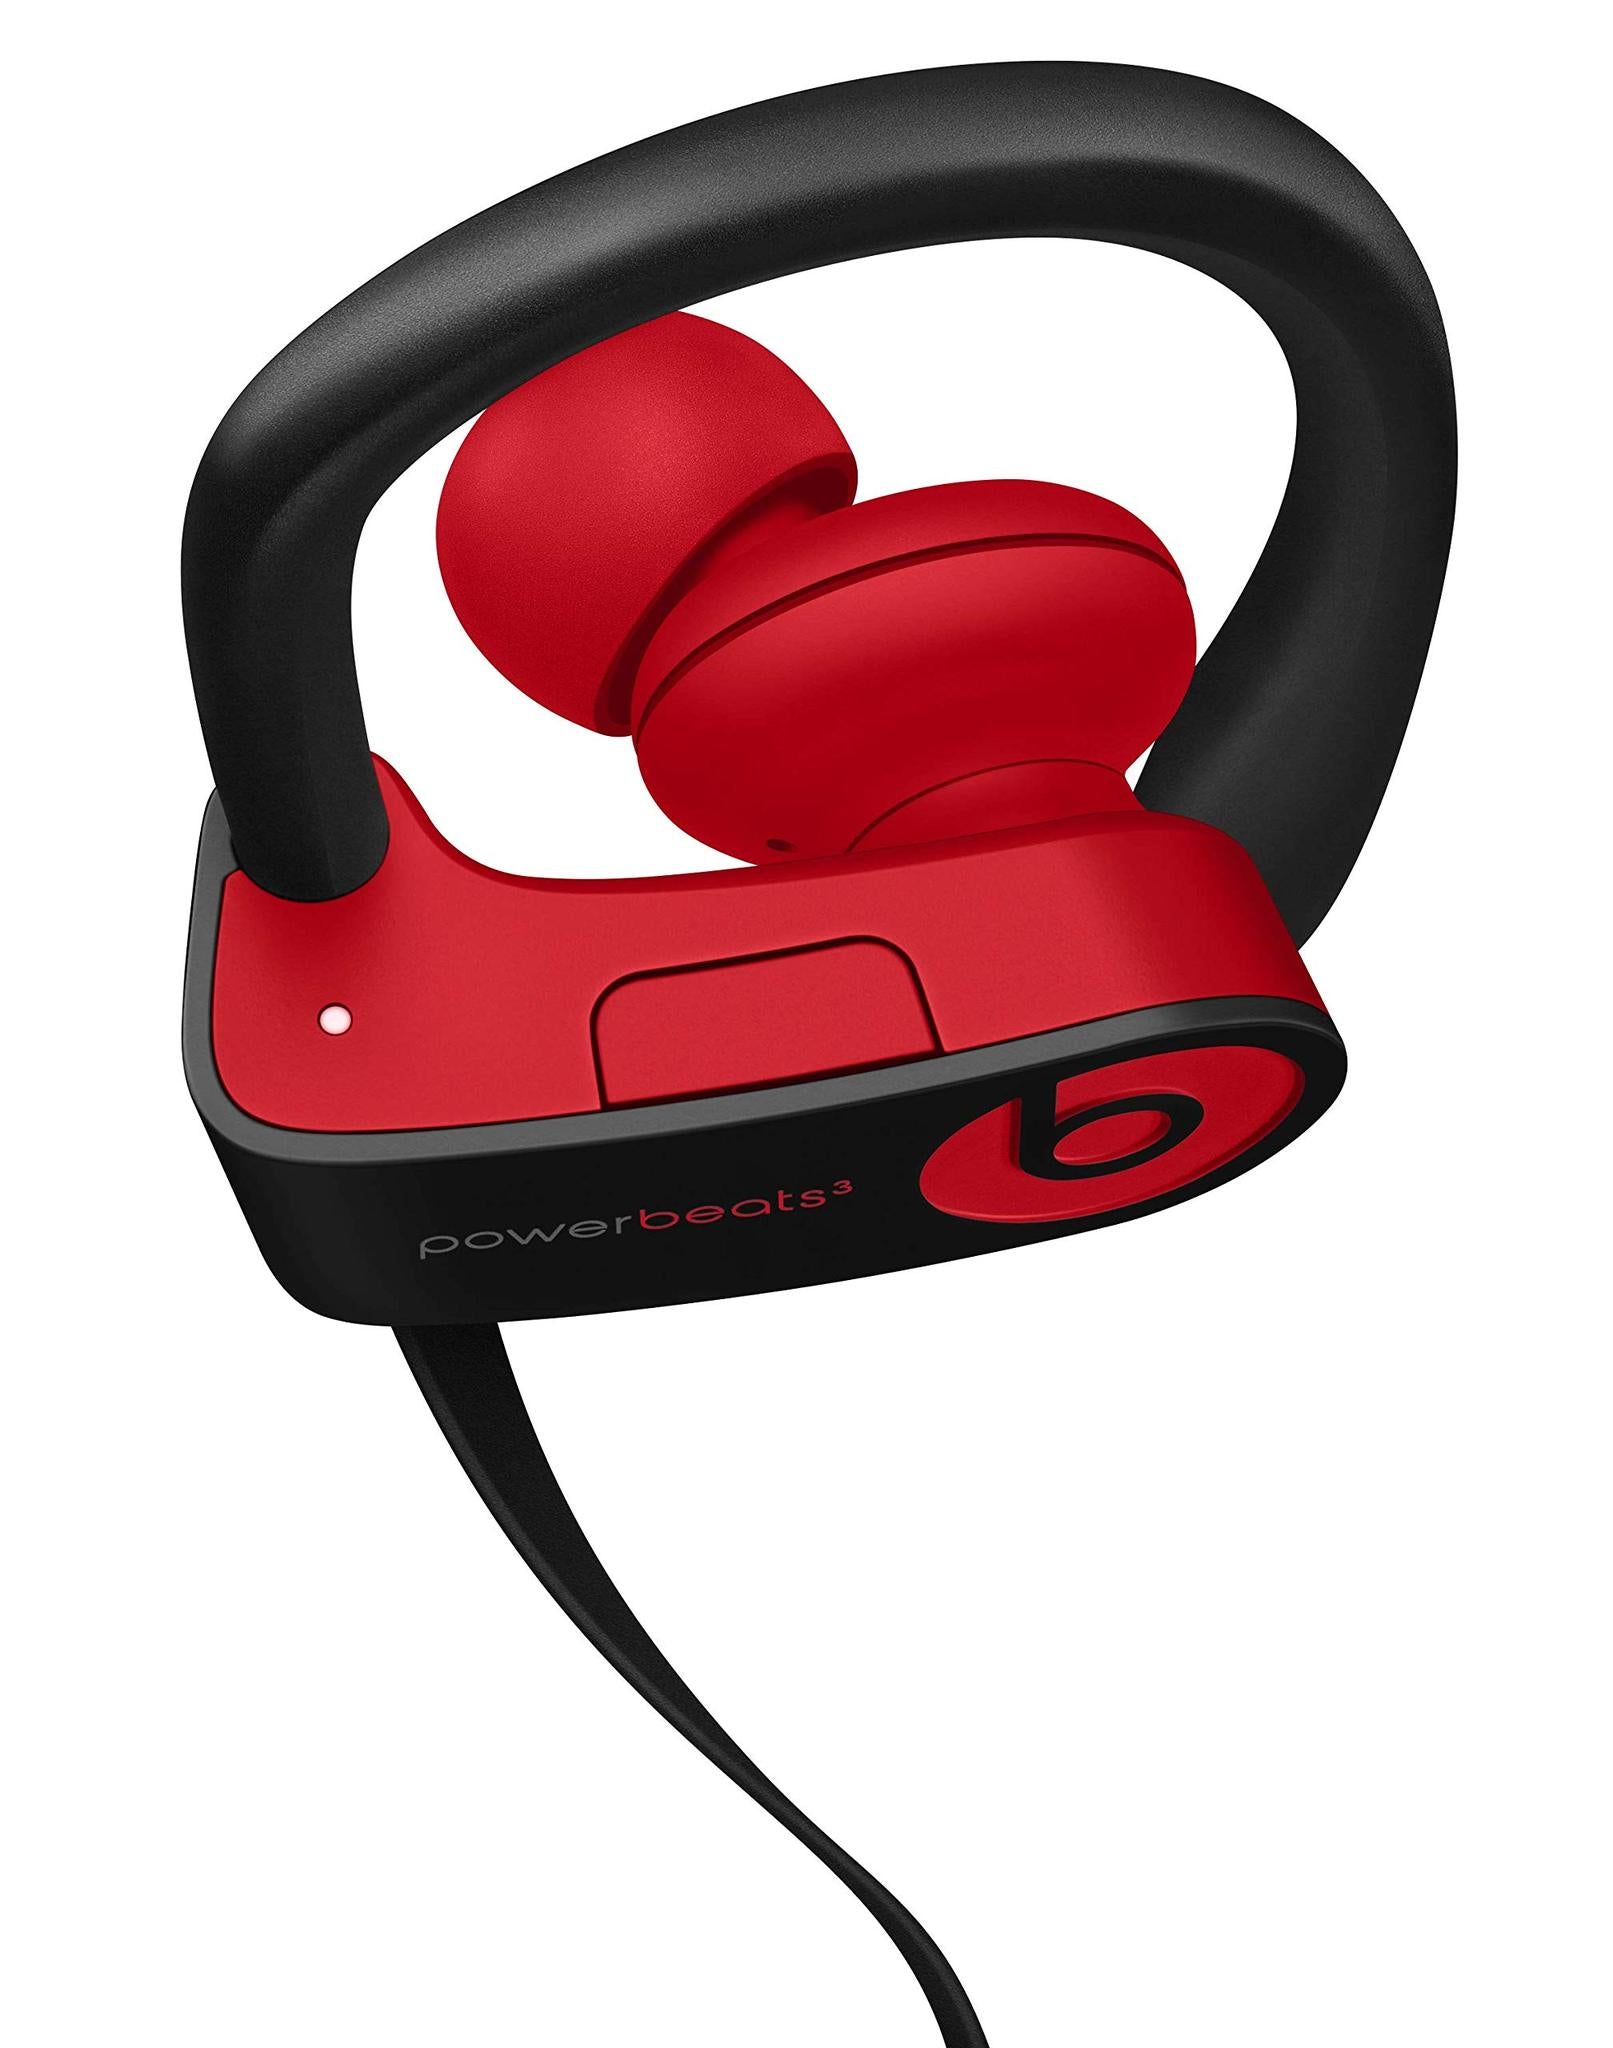 Powerbeats3 Wireless In-Ear Headphone - The Beats Decade 